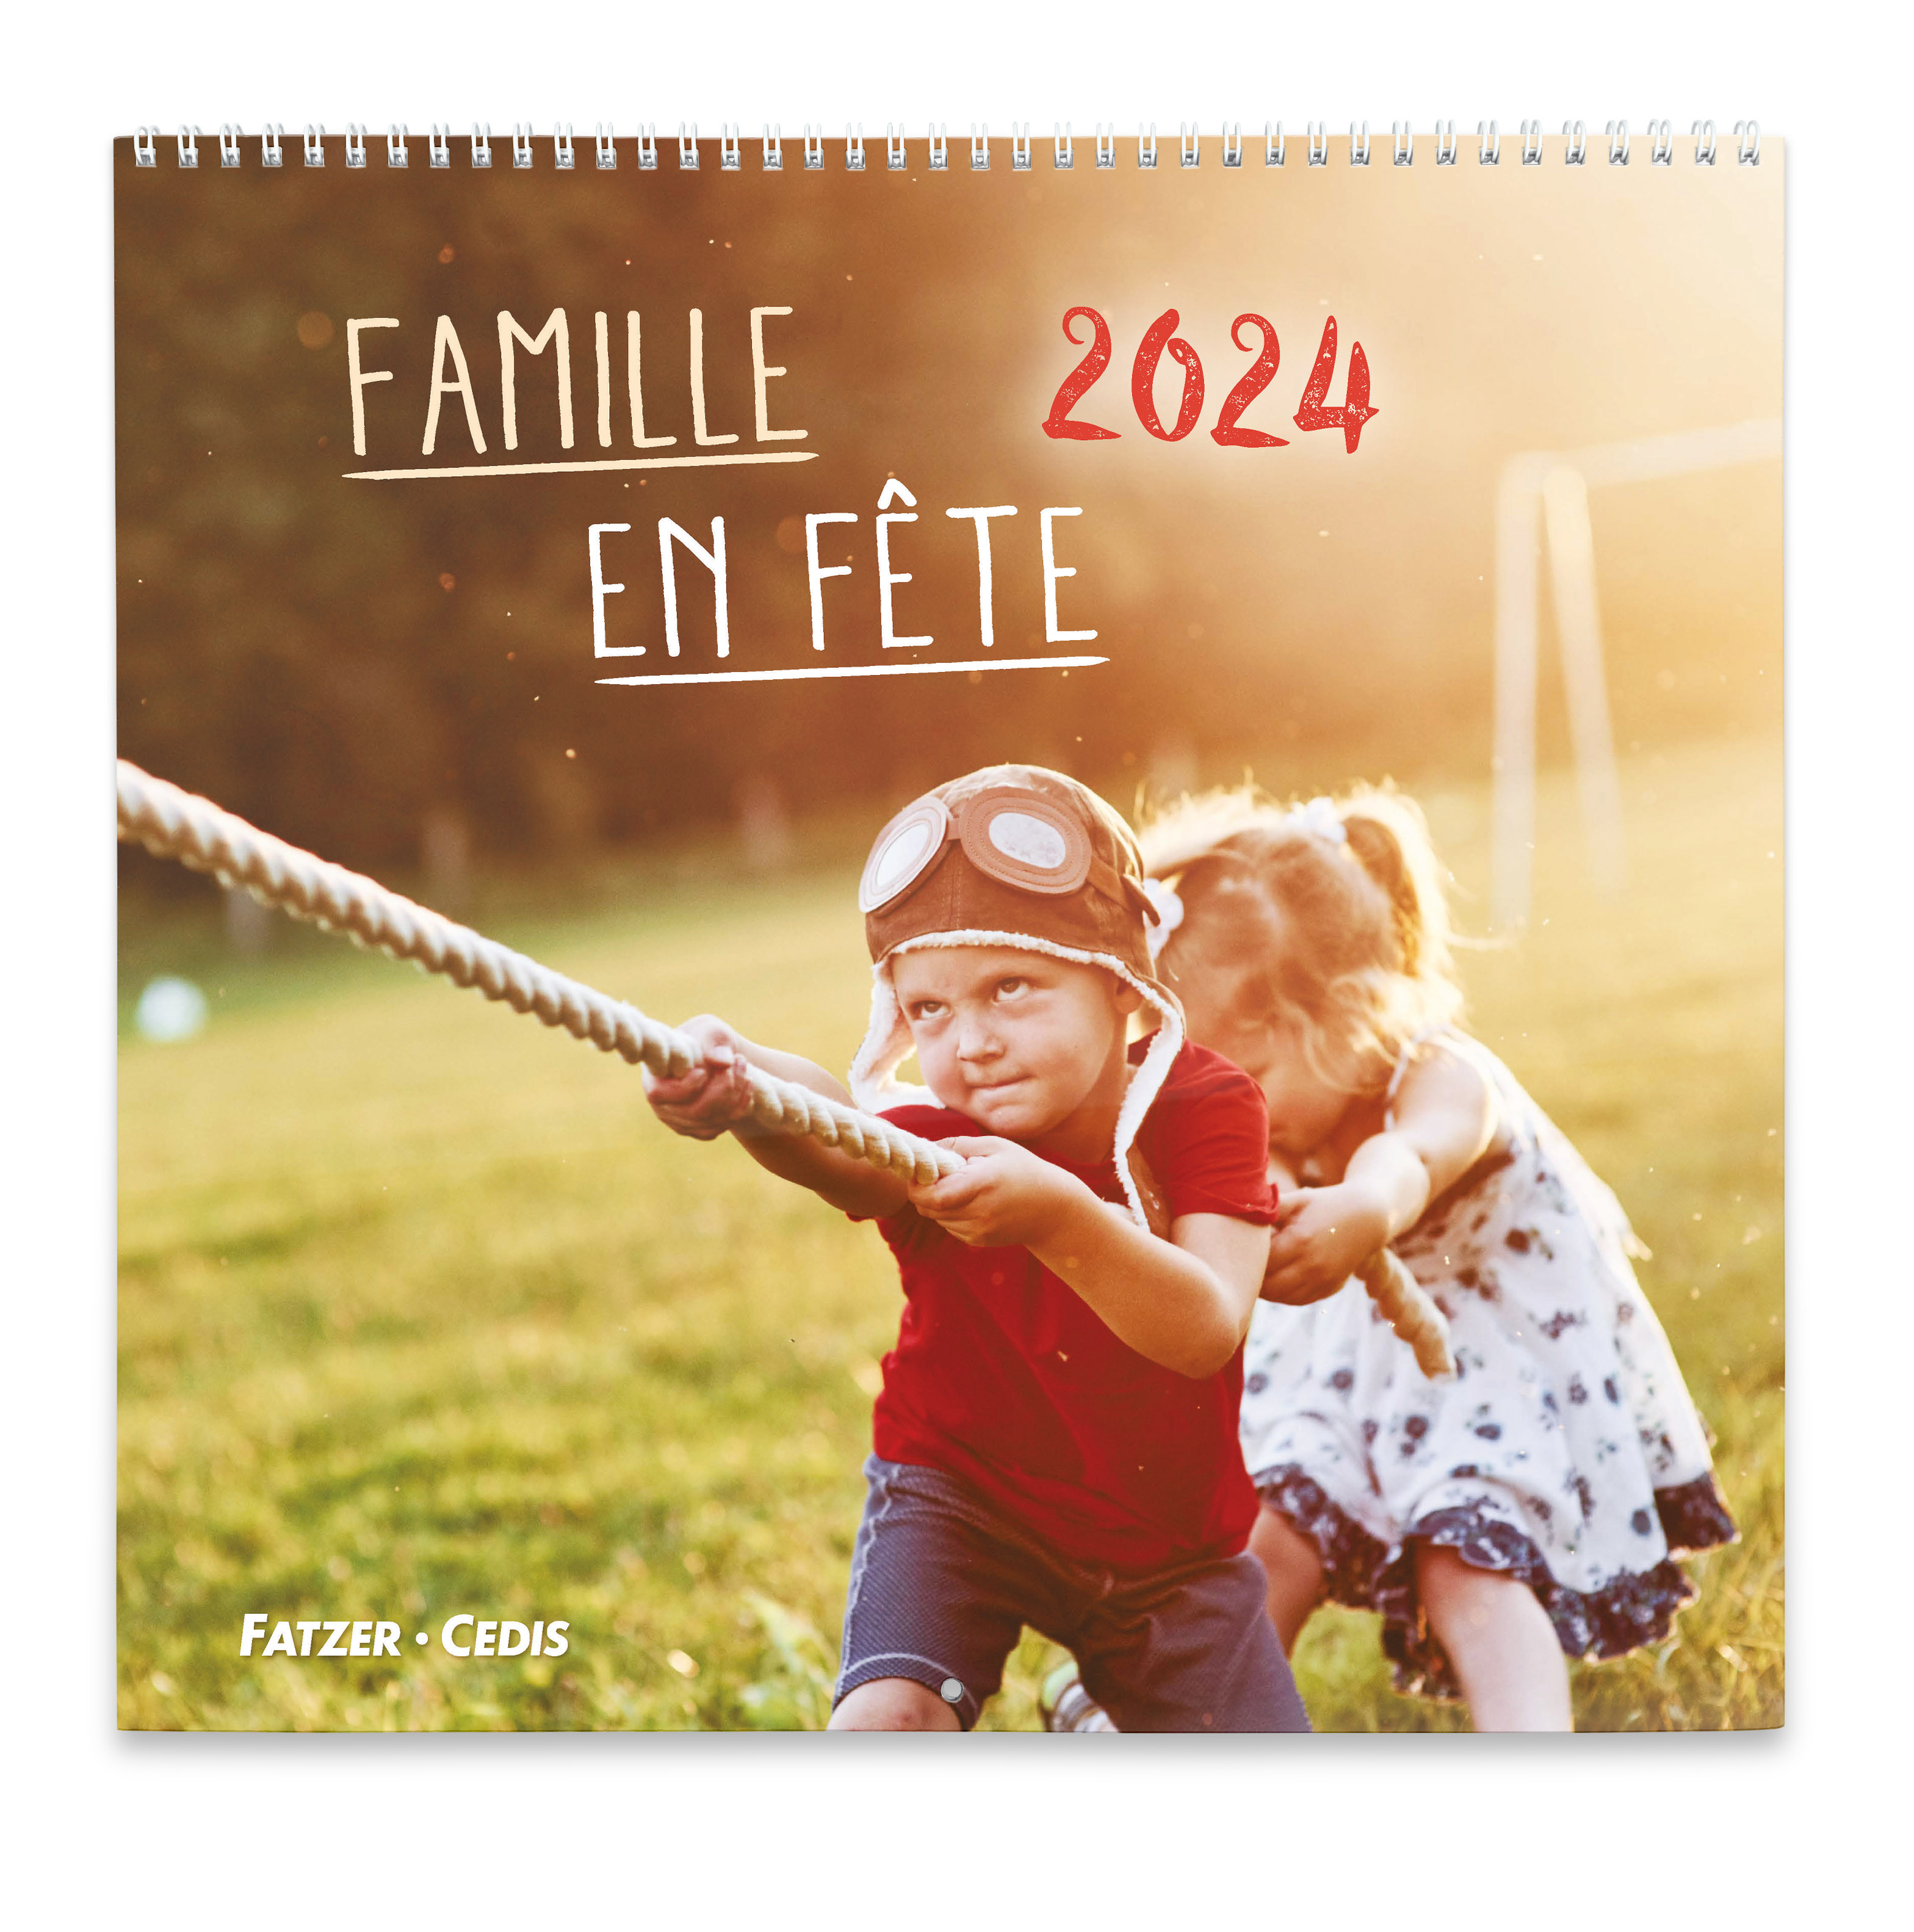 Famille en fete 2023 calendrier